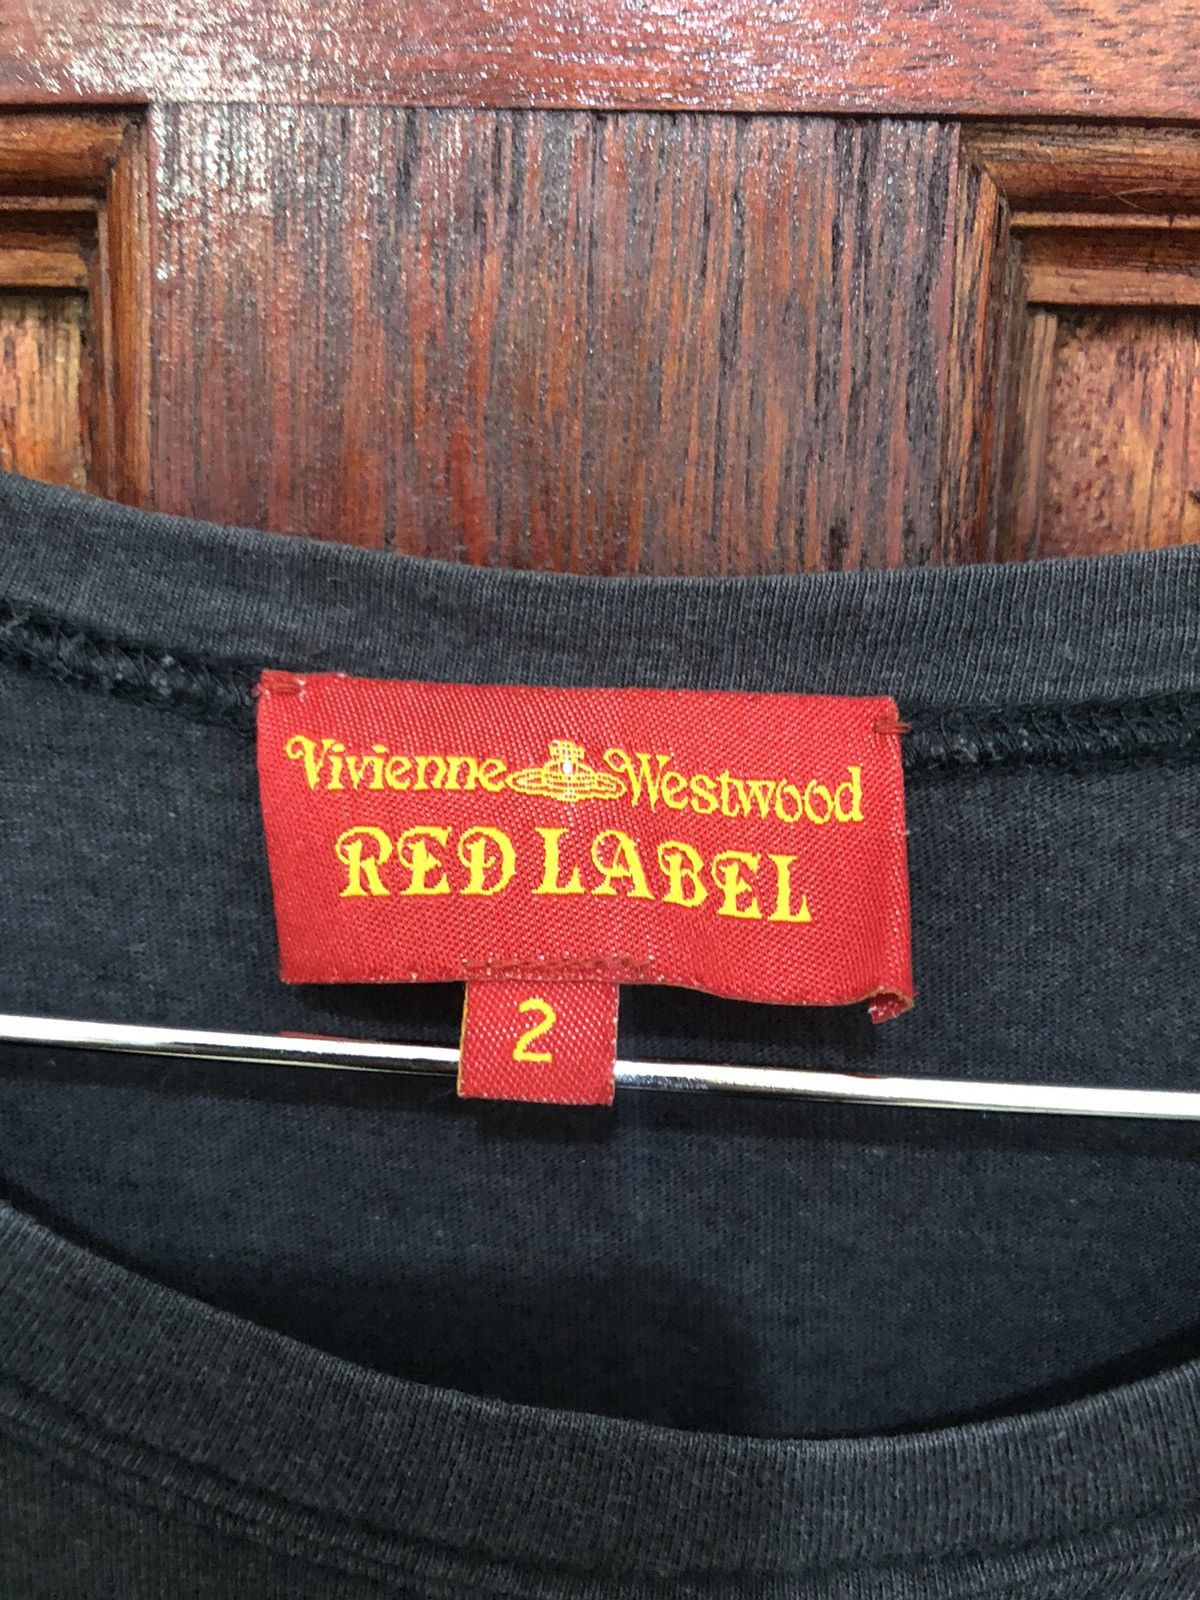 Vivienne Westwood Red Label Shirt size 2 - 8